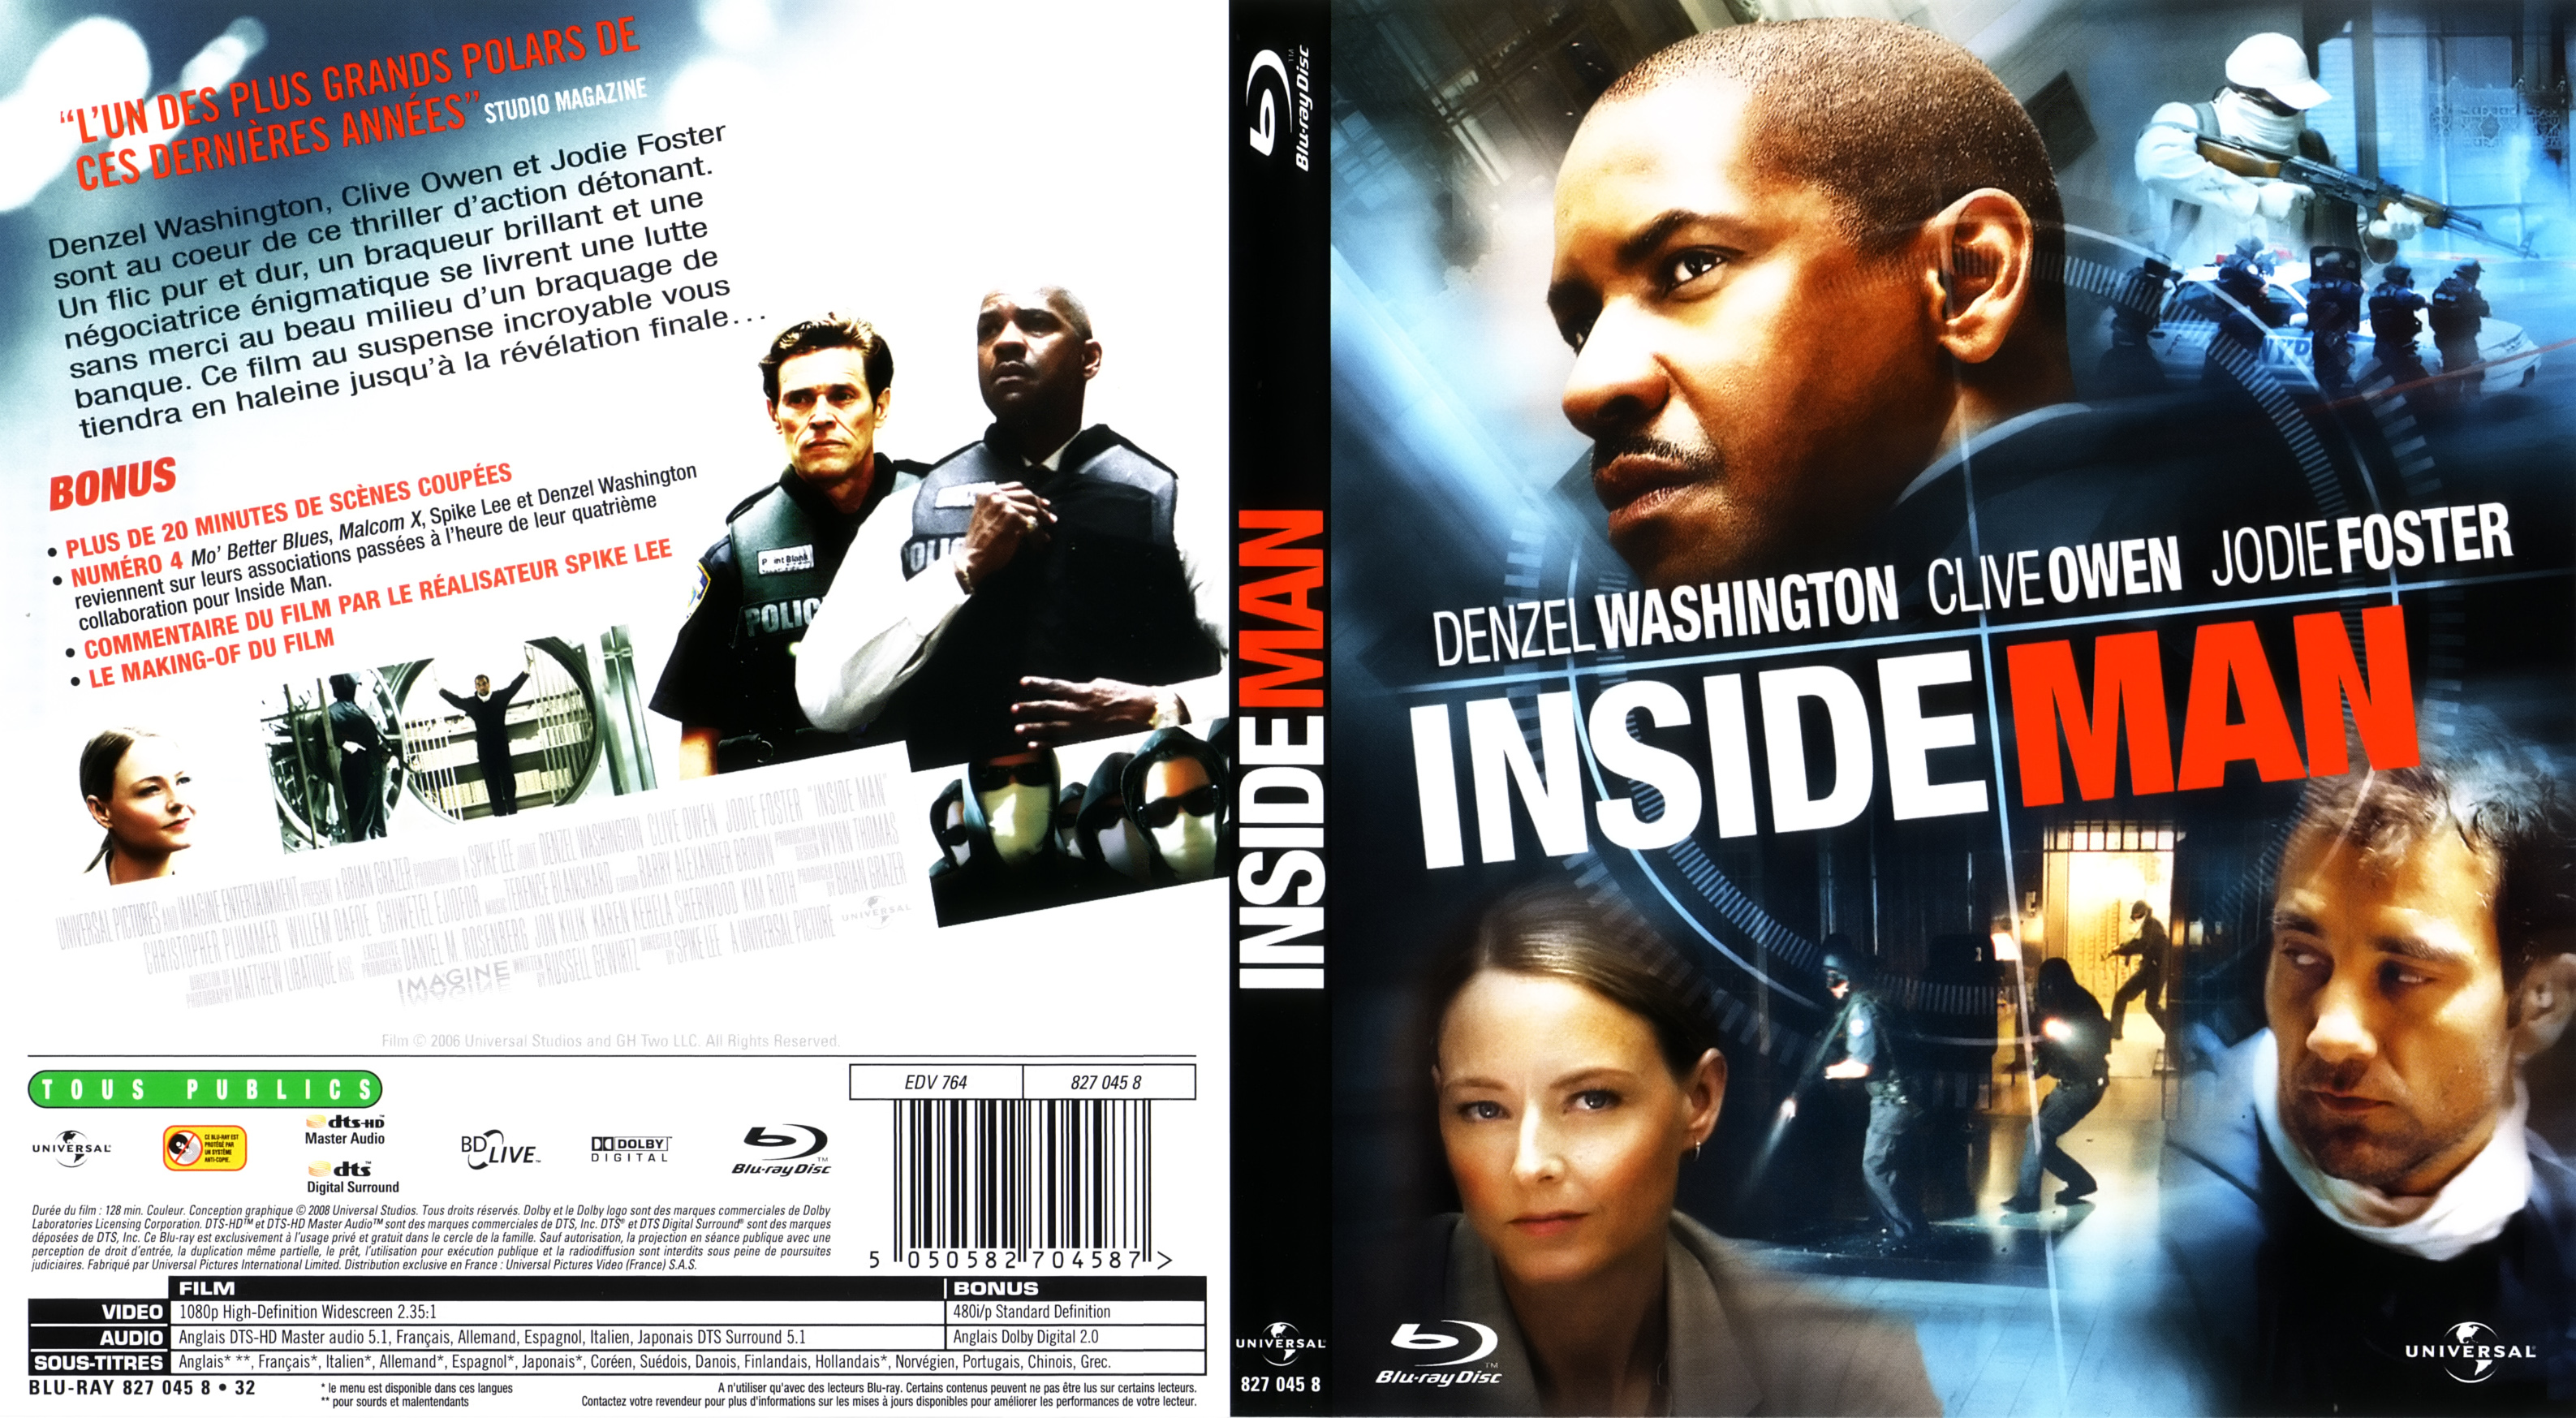 Jaquette DVD Inside man (BLU-RAY)